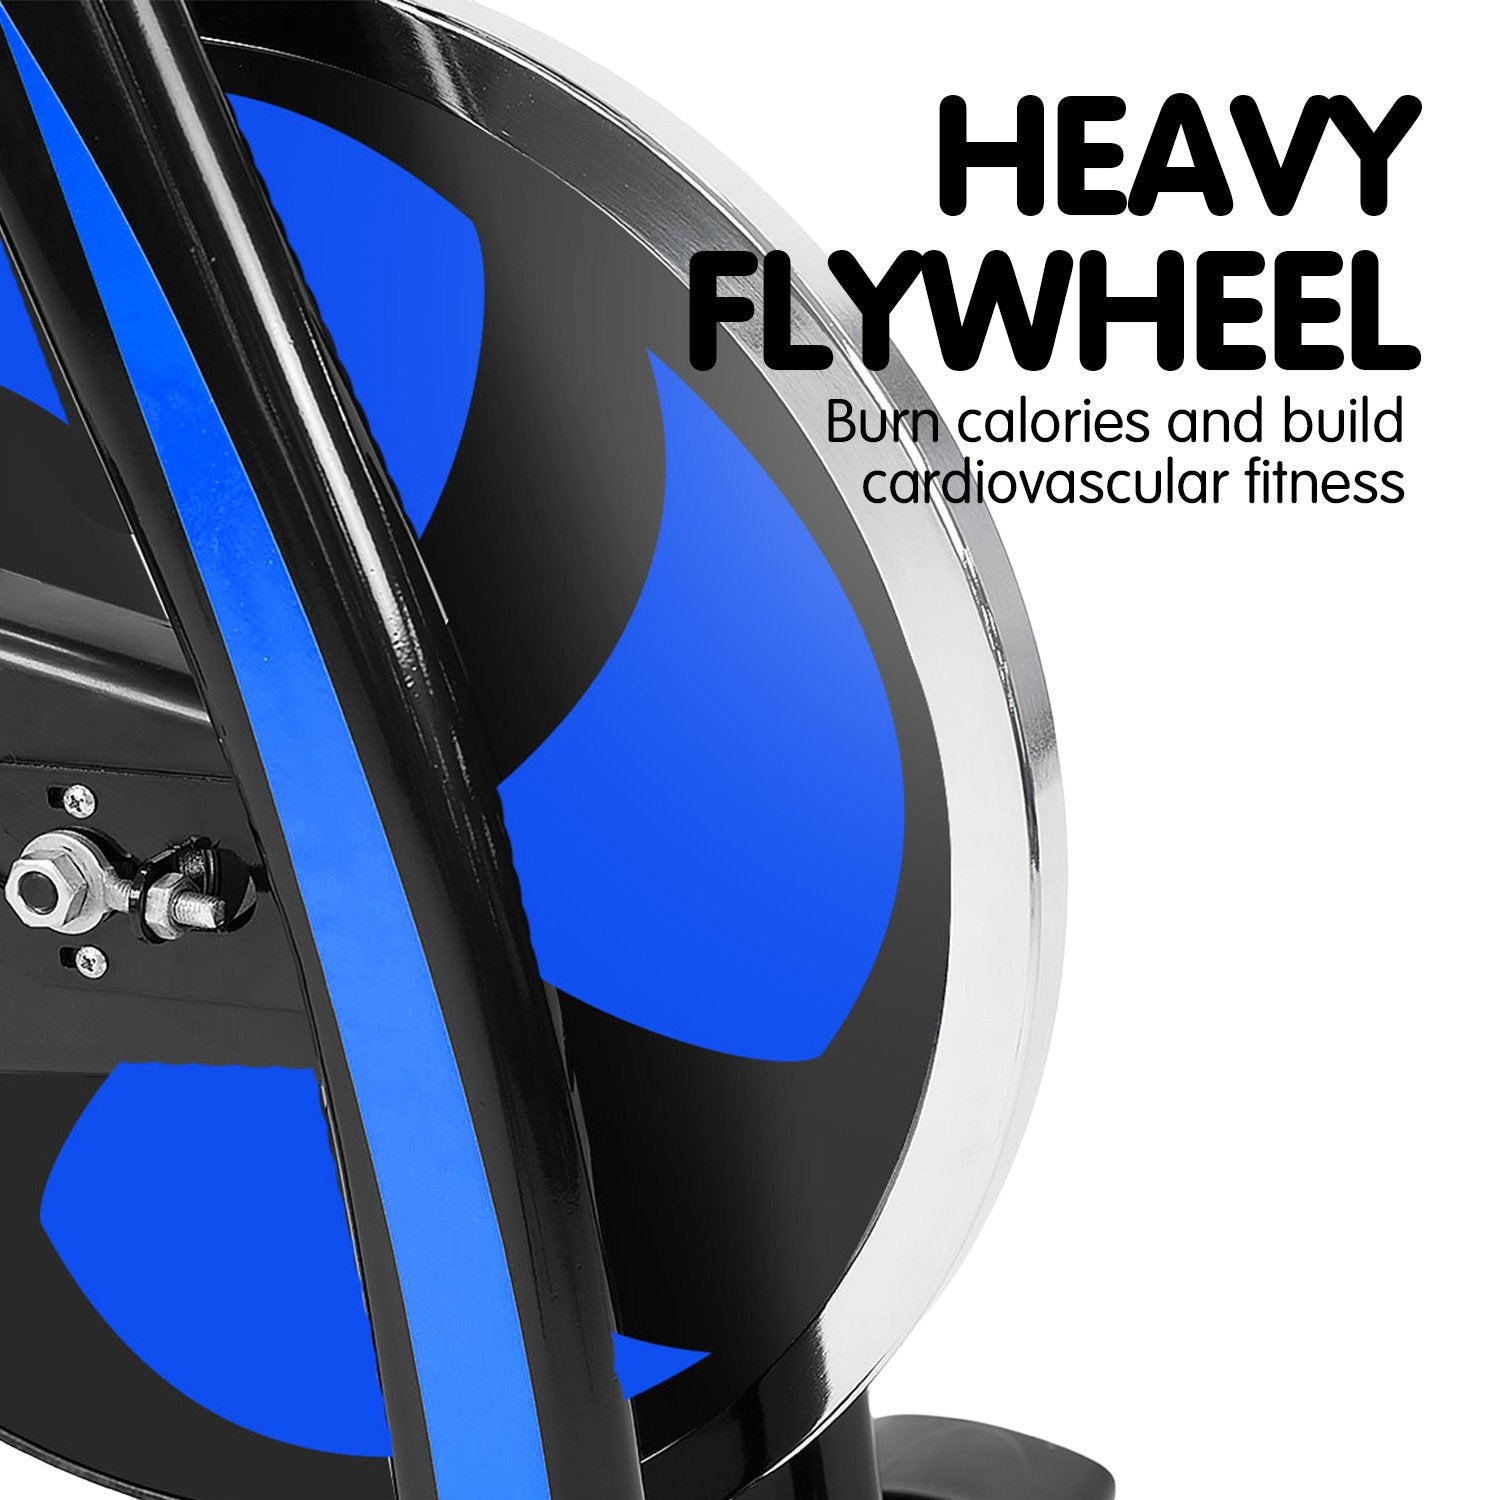 Powertrain Home Gym Flywheel Exercise Spin Bike - Blue - SILBERSHELL